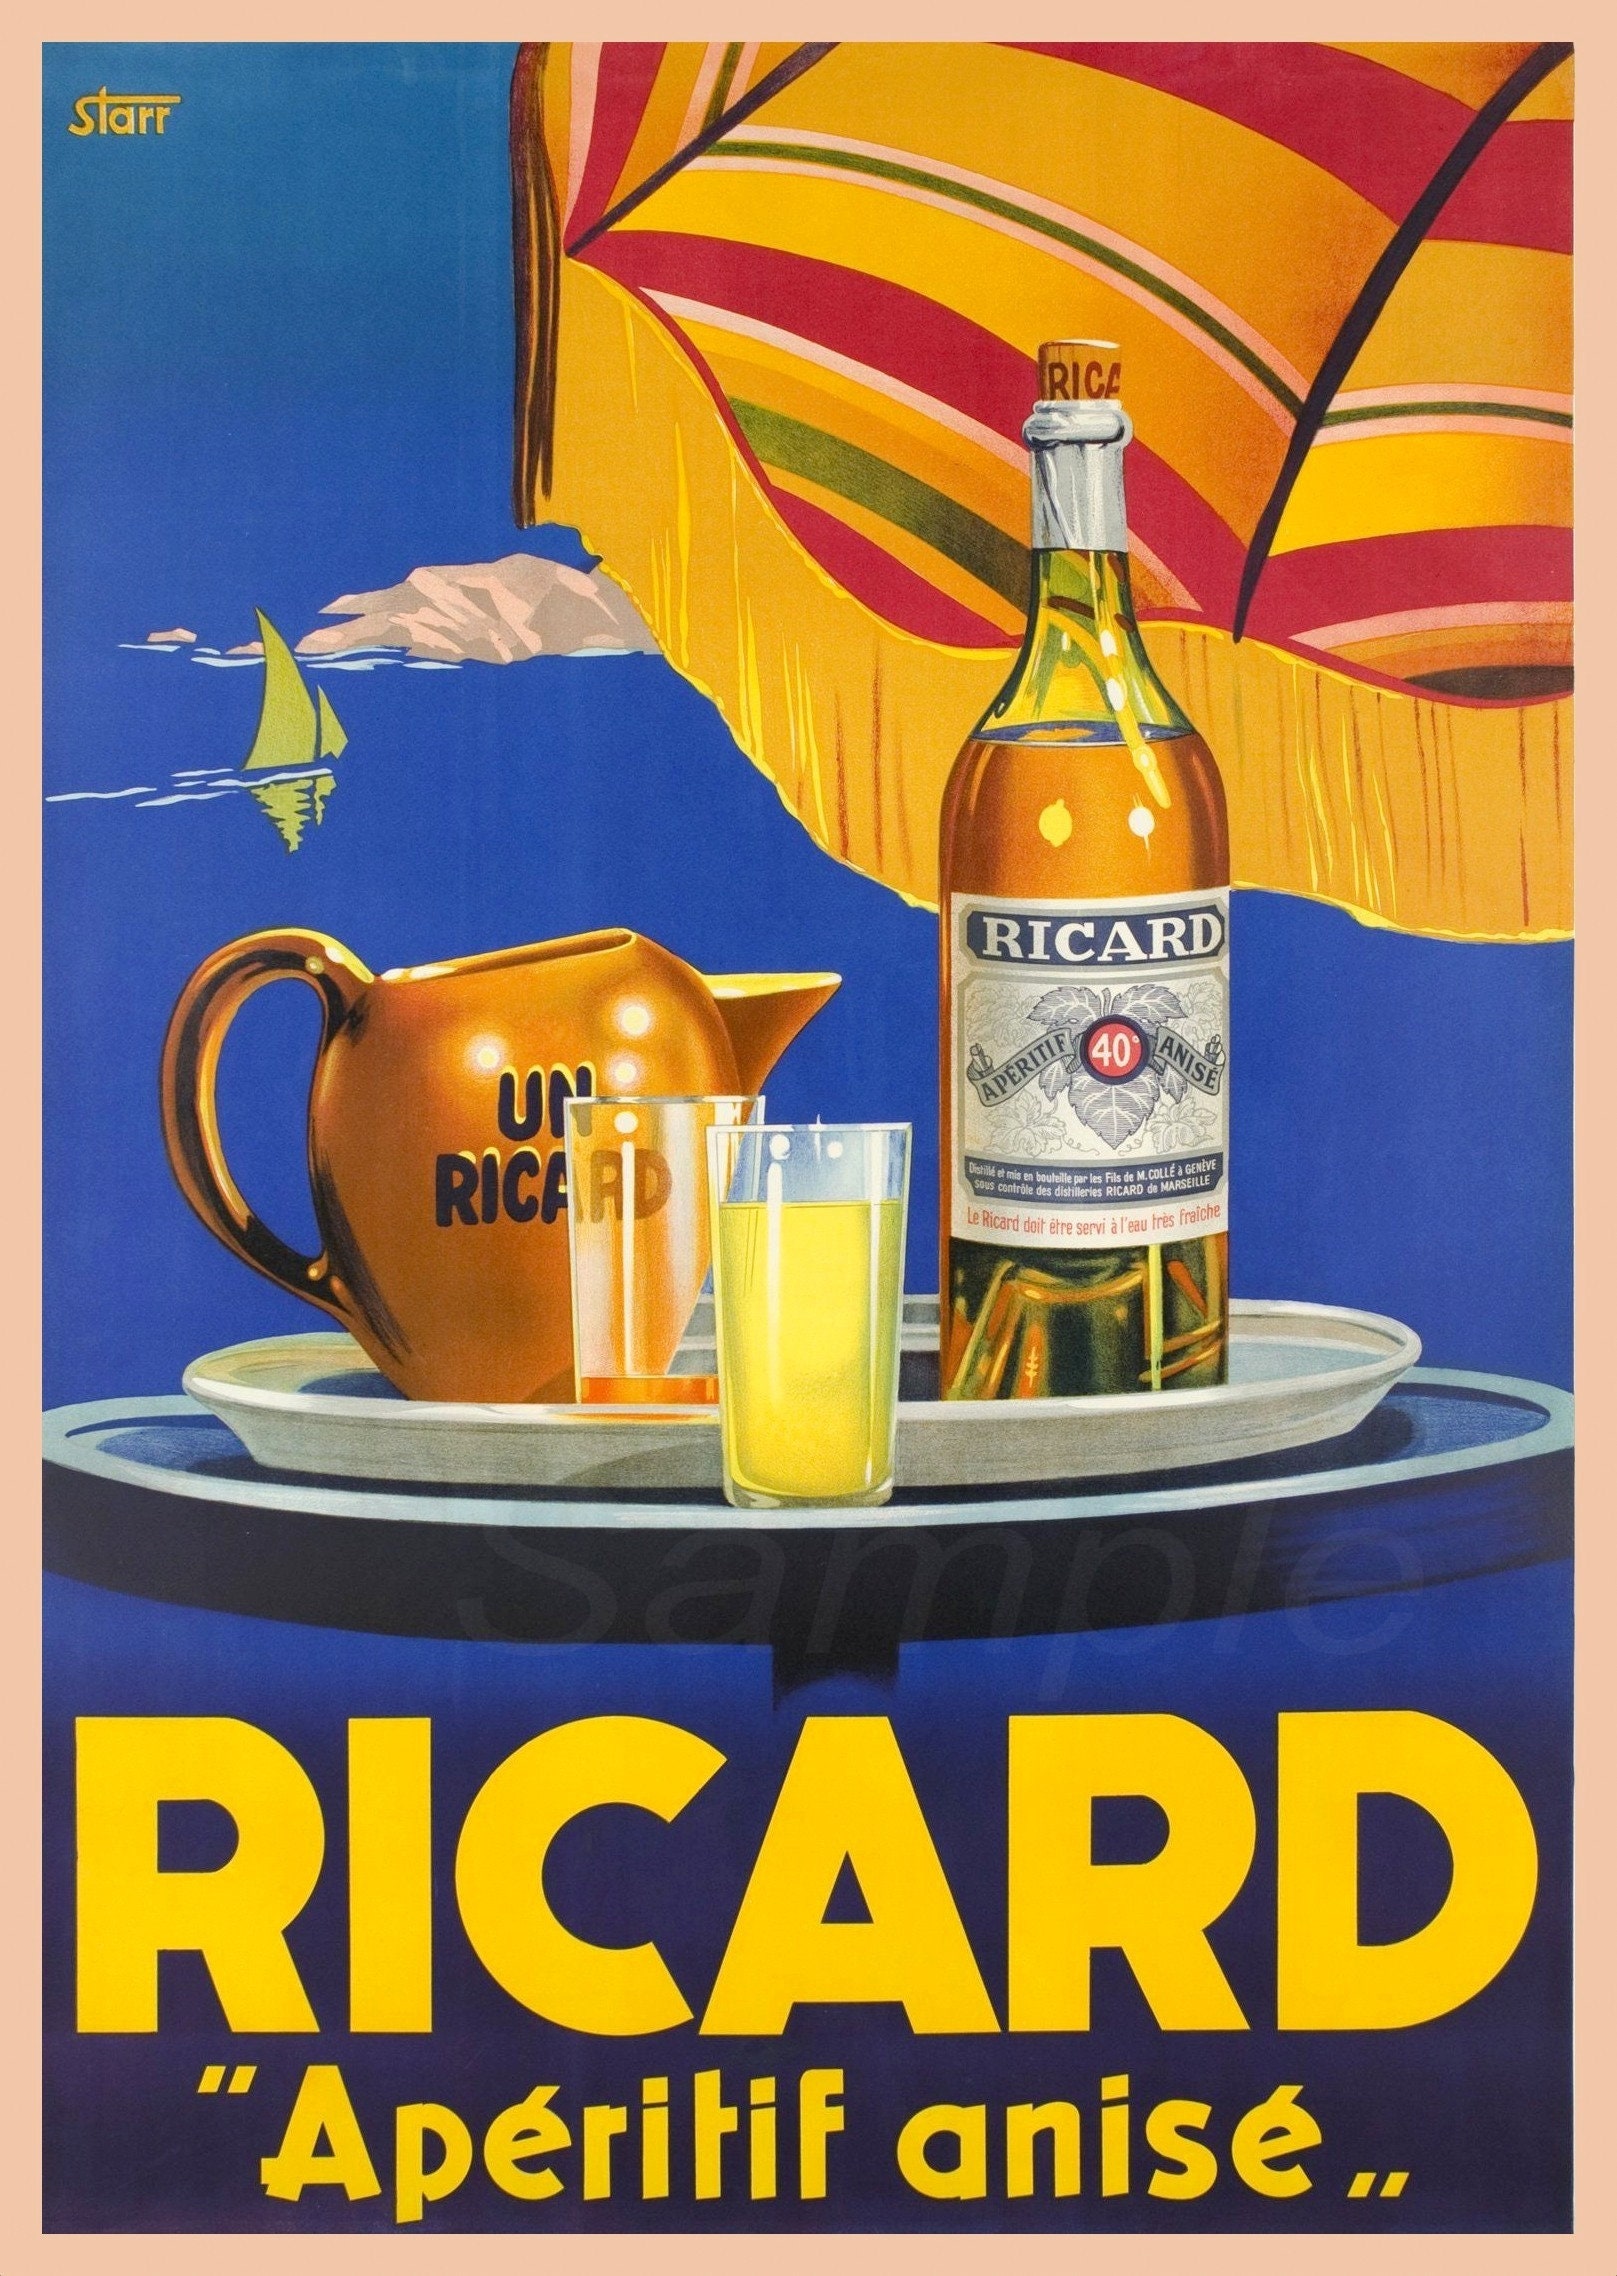 Buy Ricard Online In India -  India